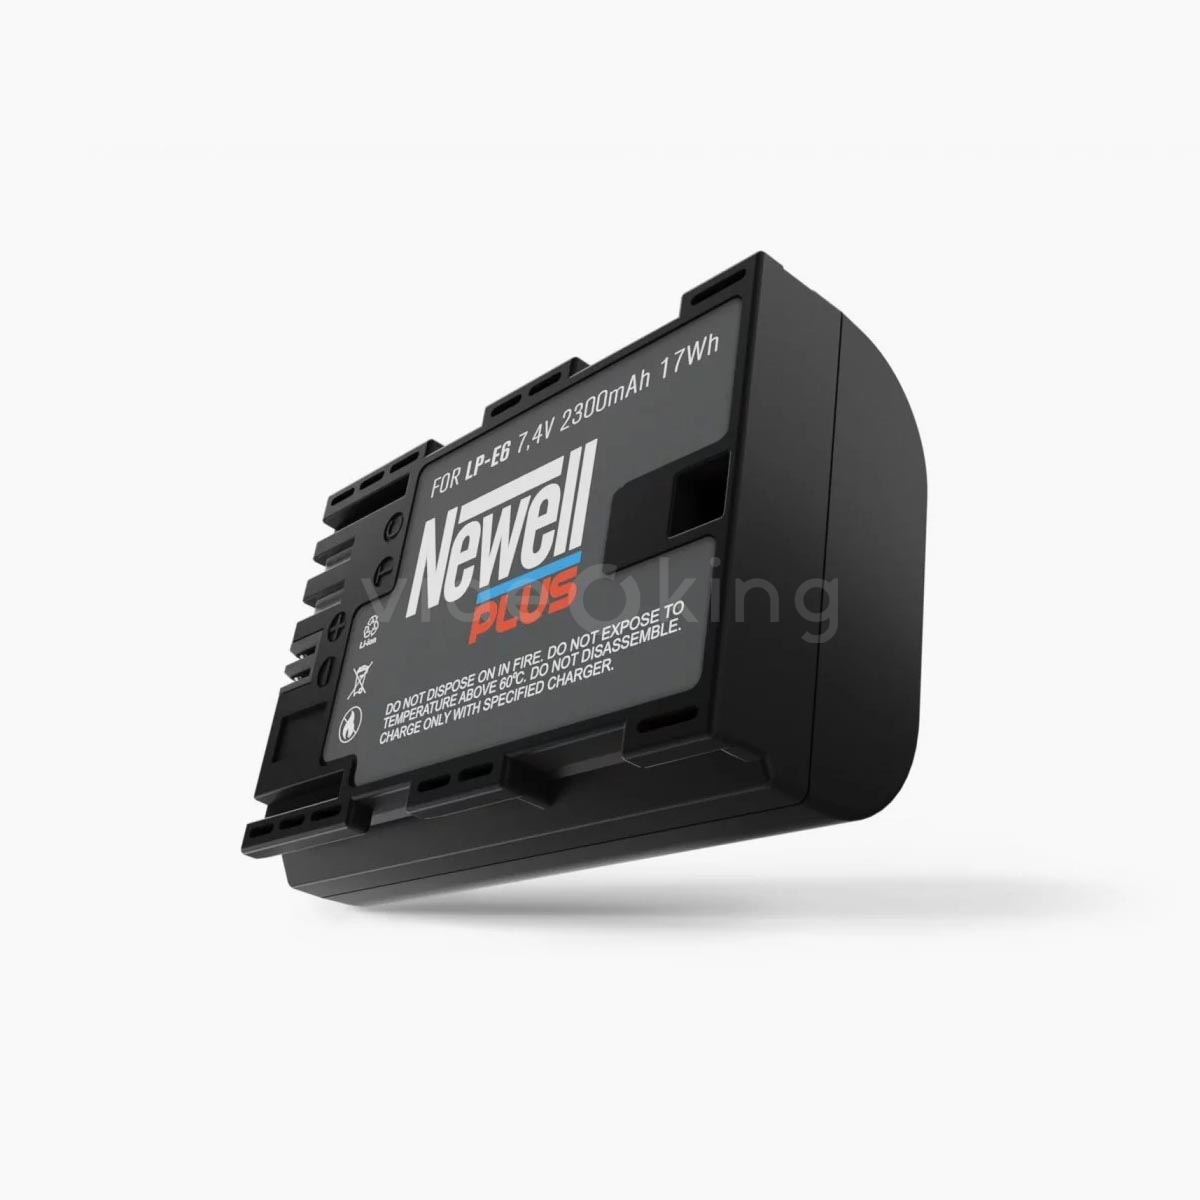 Newell Plus LP-E6 battery (2300 mAh)